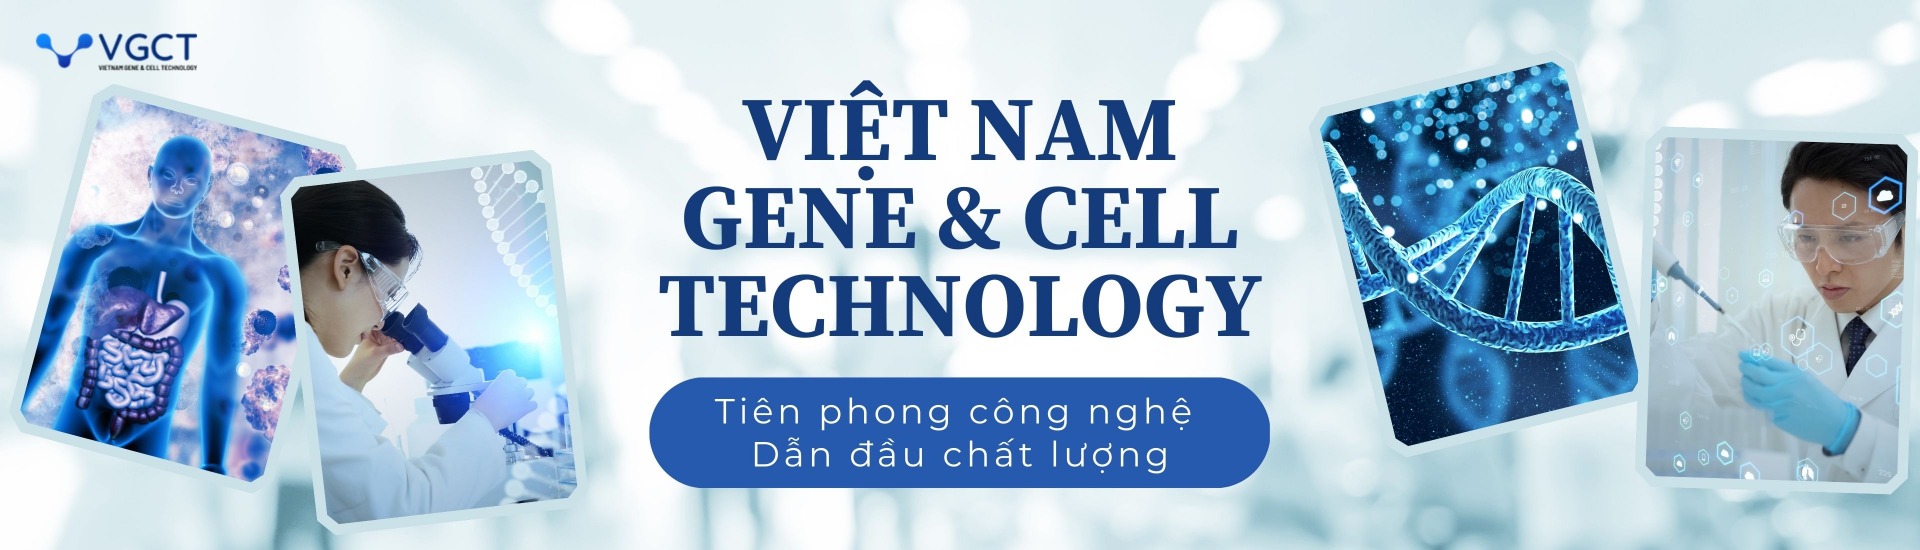 Vietnam Gene Cell Technology Joint Stock Company - VGCT.COM.VN